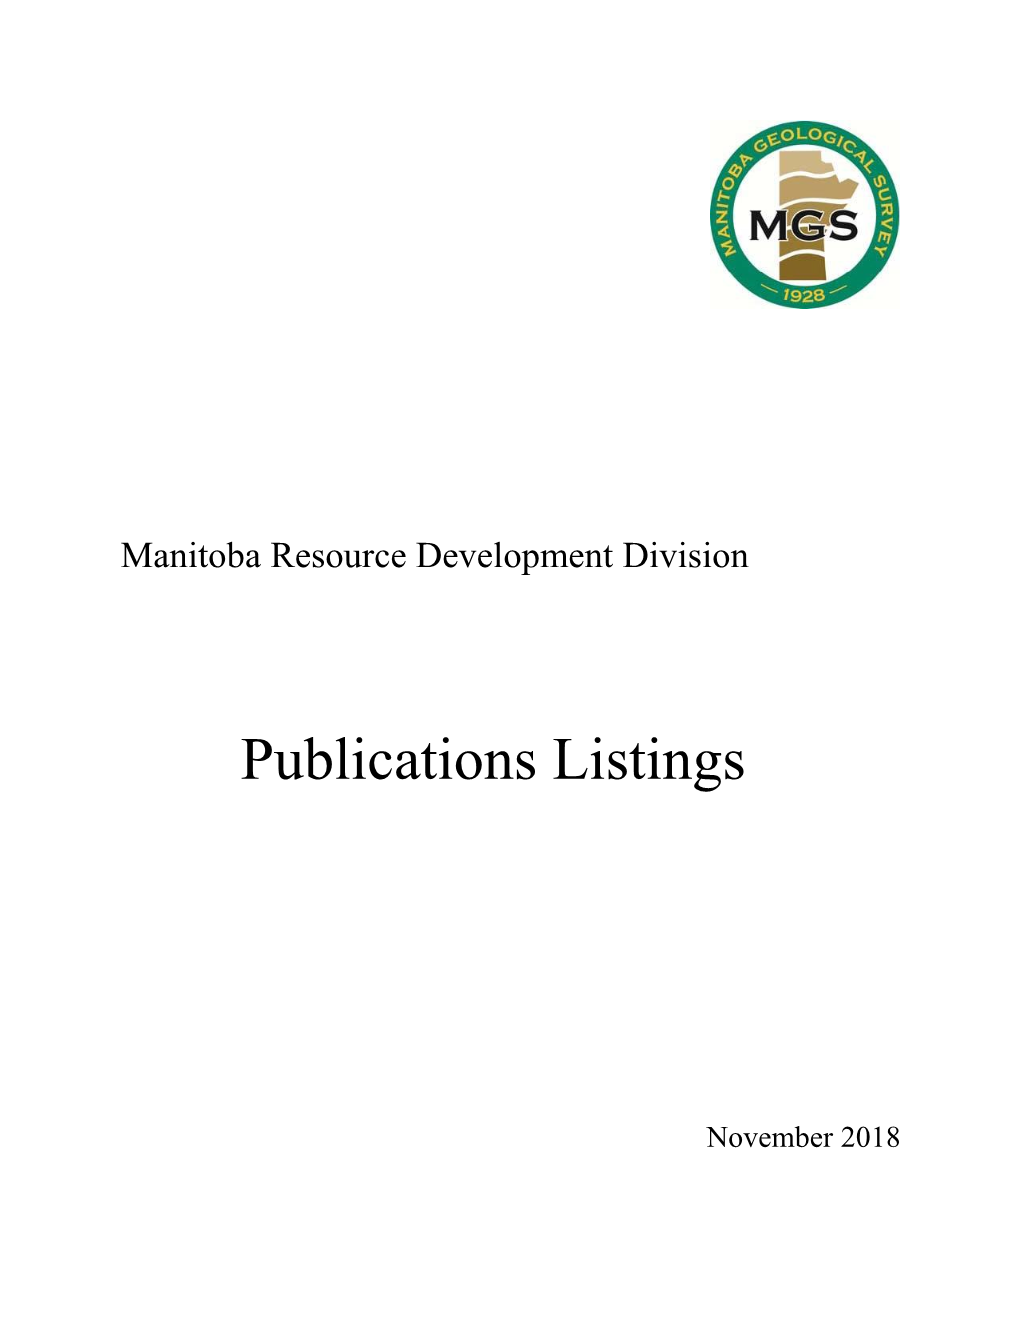 Resource Development Division Publications Listings -- November 2018